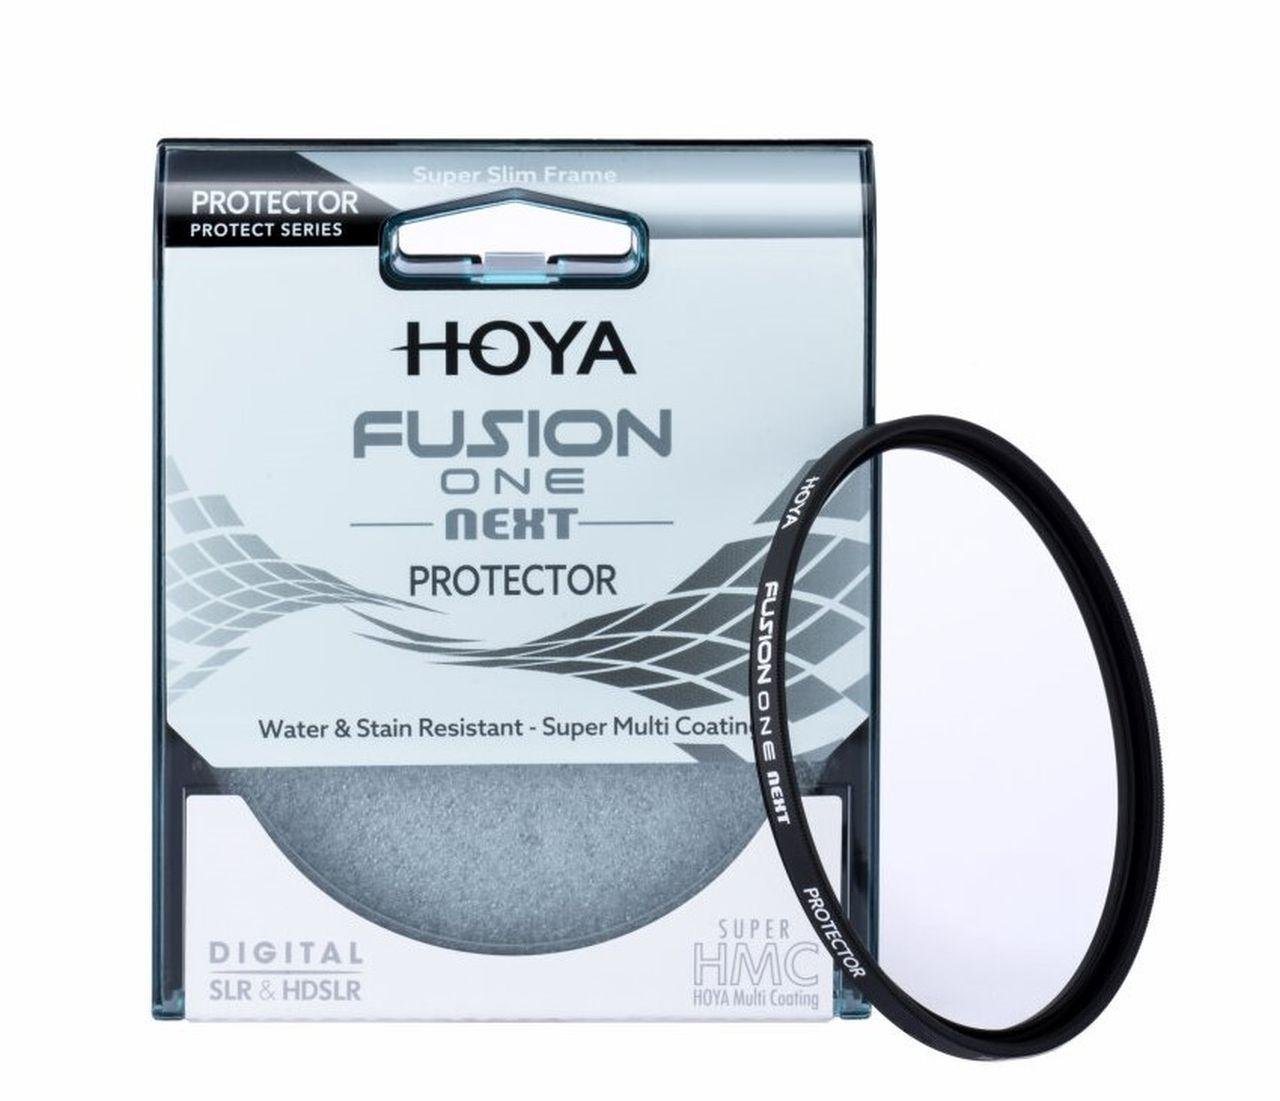 Hoya Fusion ONE Next Protector 67mm Objektivzubehör von Hoya